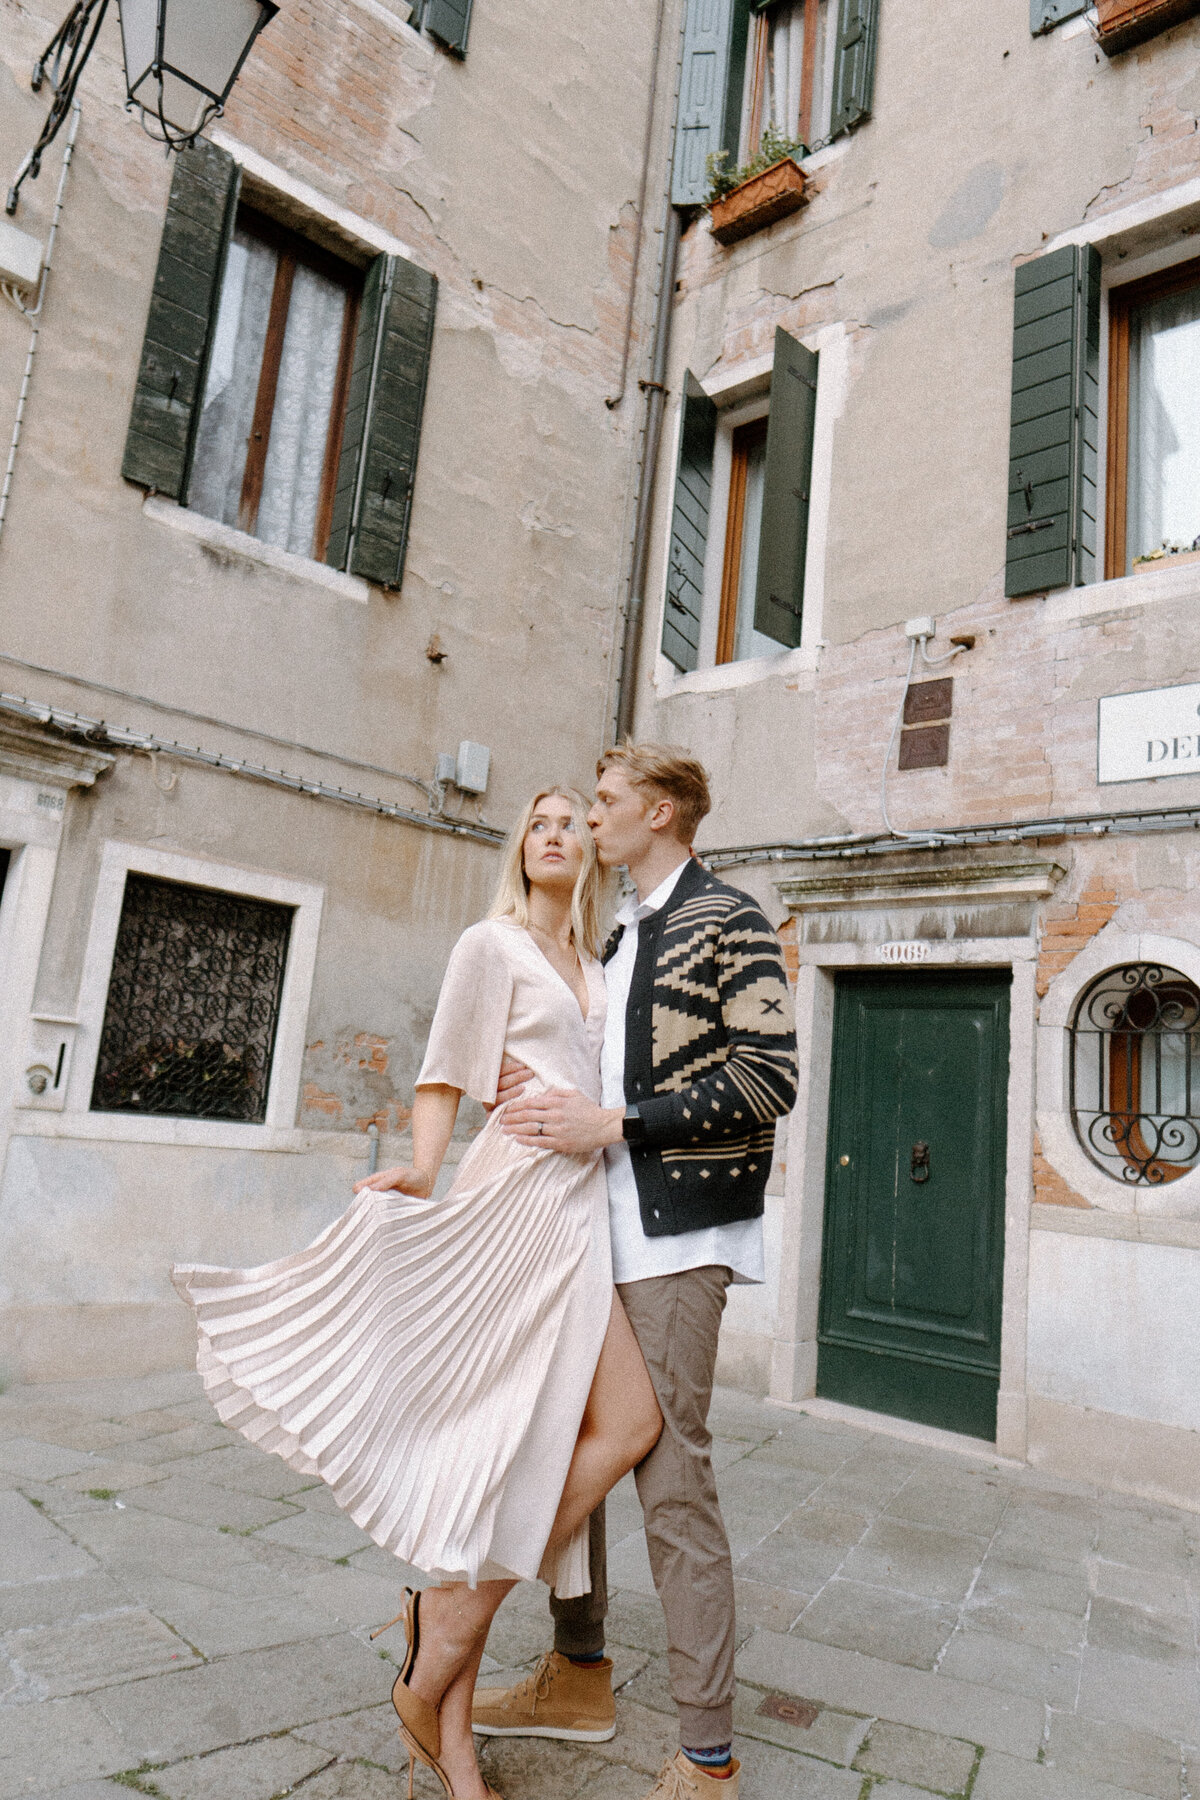 Documentary-Style-Editorial-Vogue-Italy-Destination-Wedding-Leah-Gunn-Photography-10